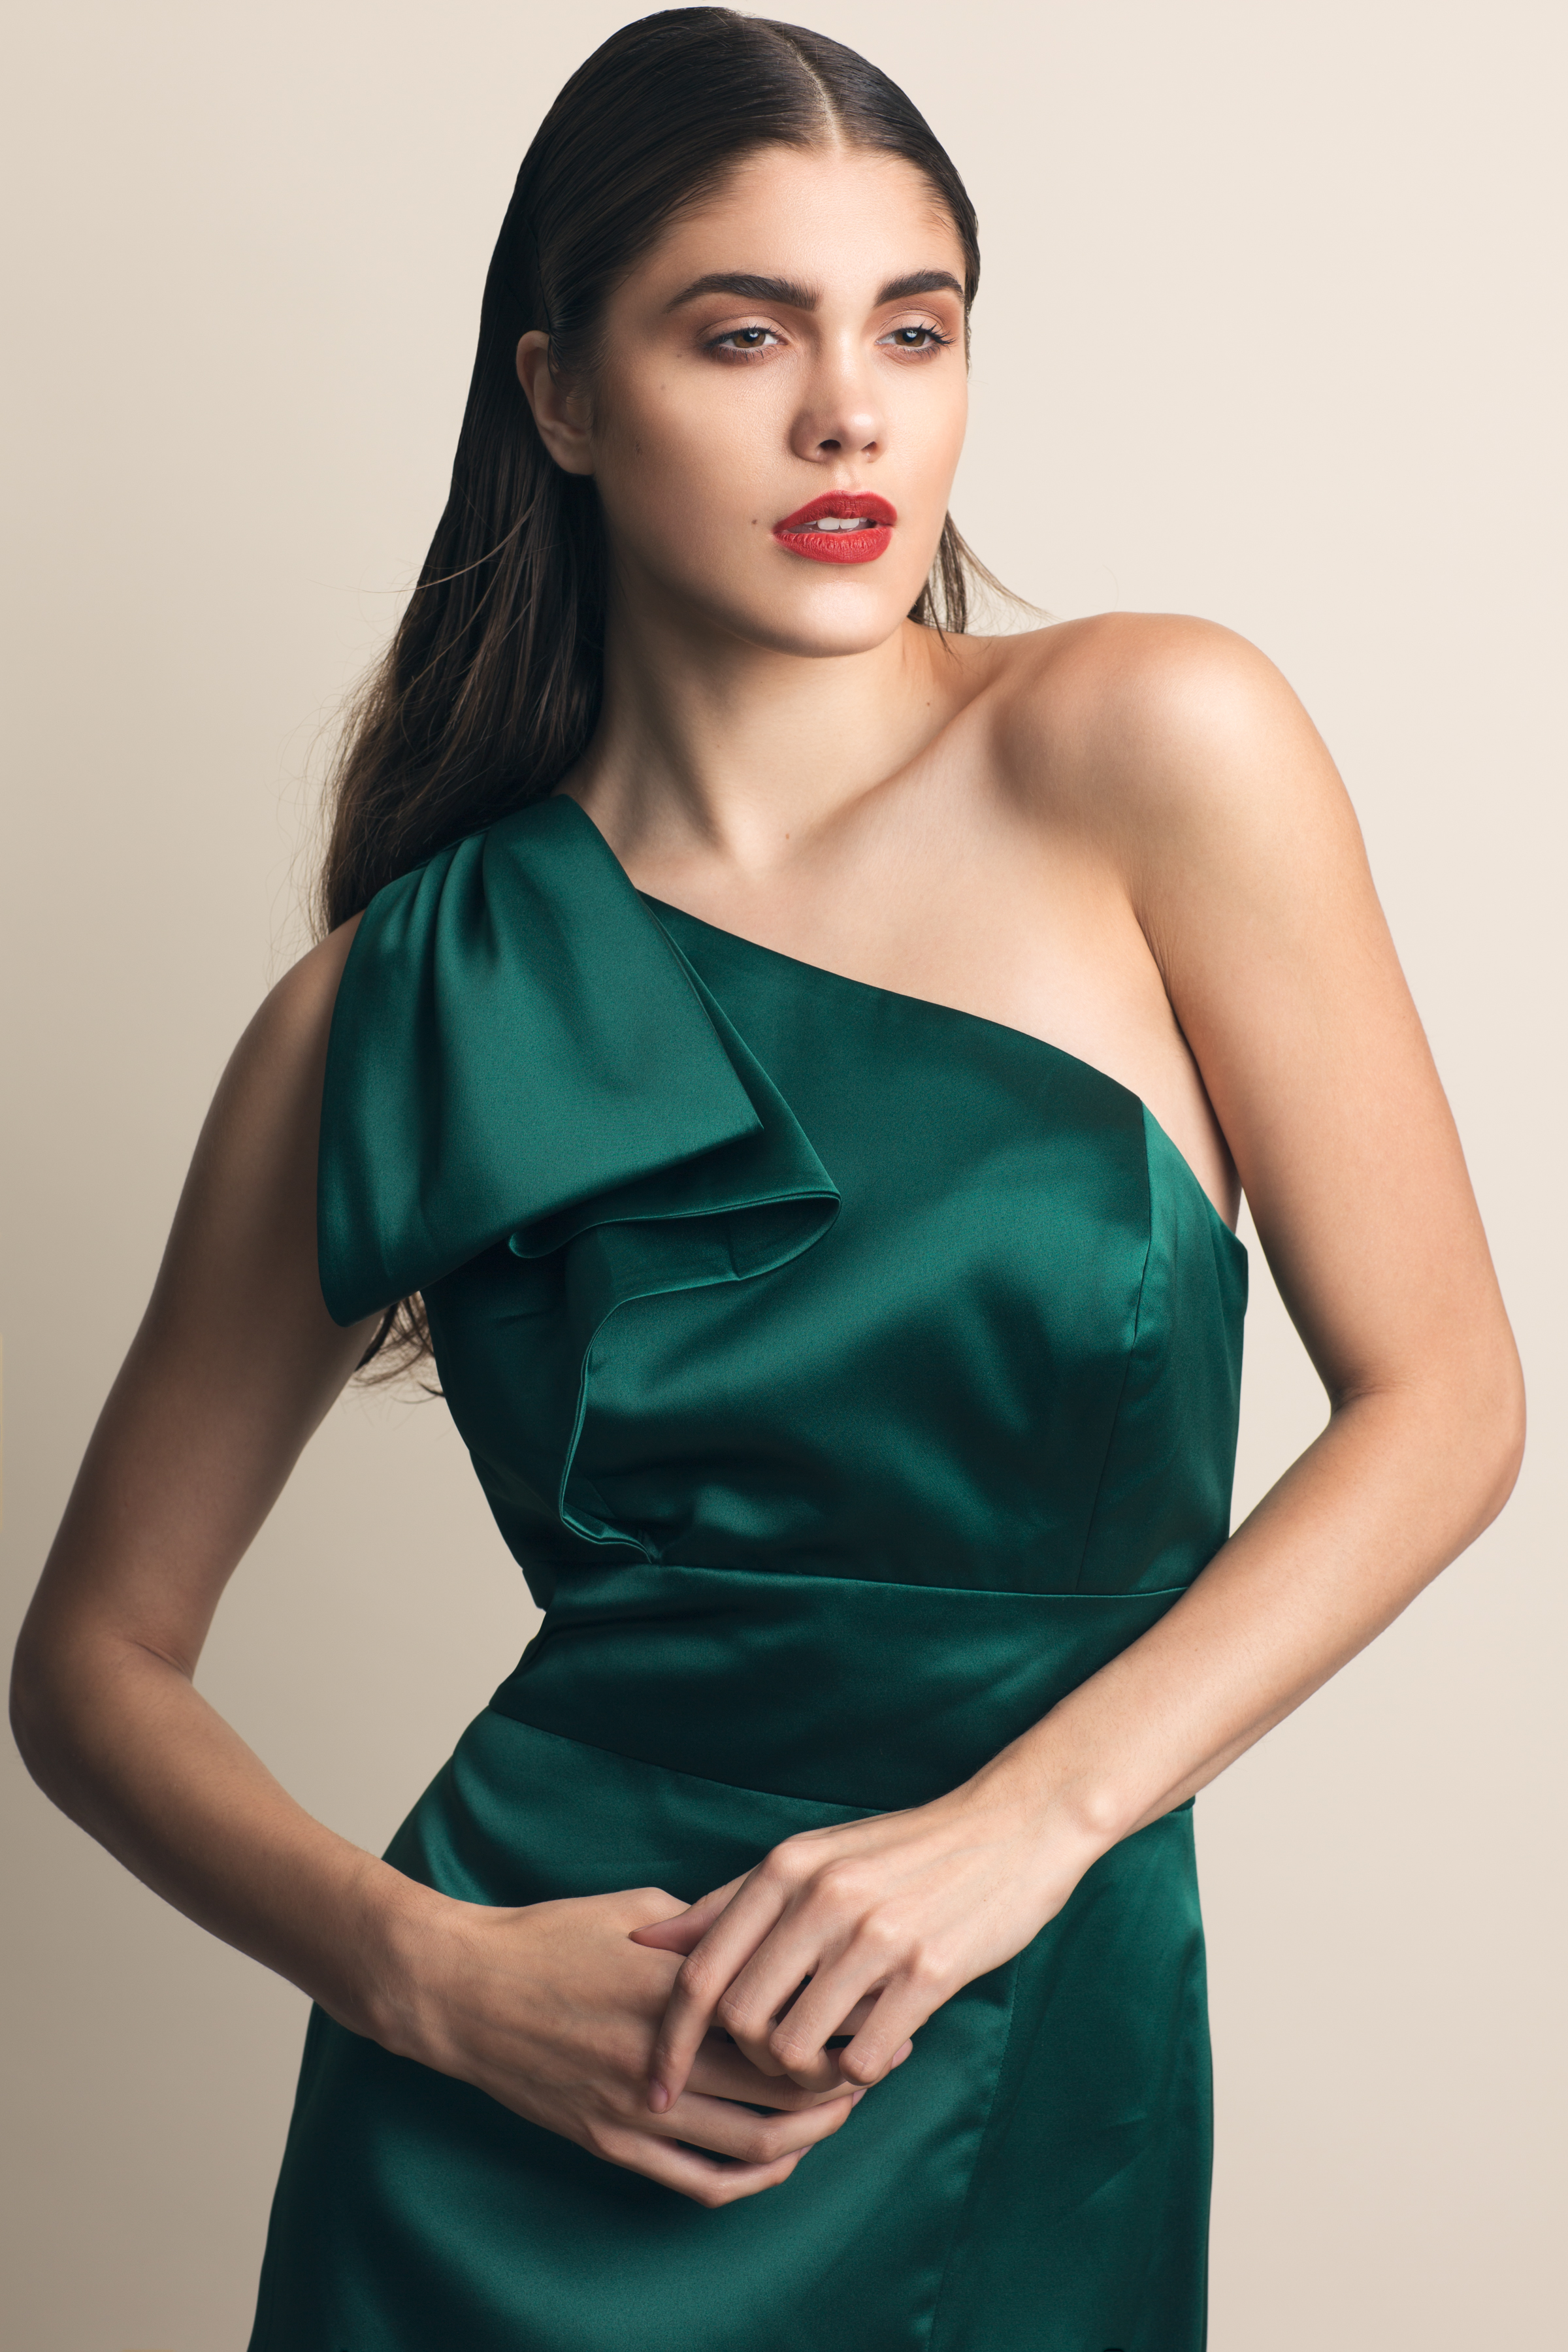  MODEL | Rhiana Long AGENCY | Edge Agency MUA | Lisa Hallam Makeup Artistry WARDROBE | UnVeiled Dress Co. Ltd. PHOTOGRAPHY + RETOUCH | Nicole Romanoff 